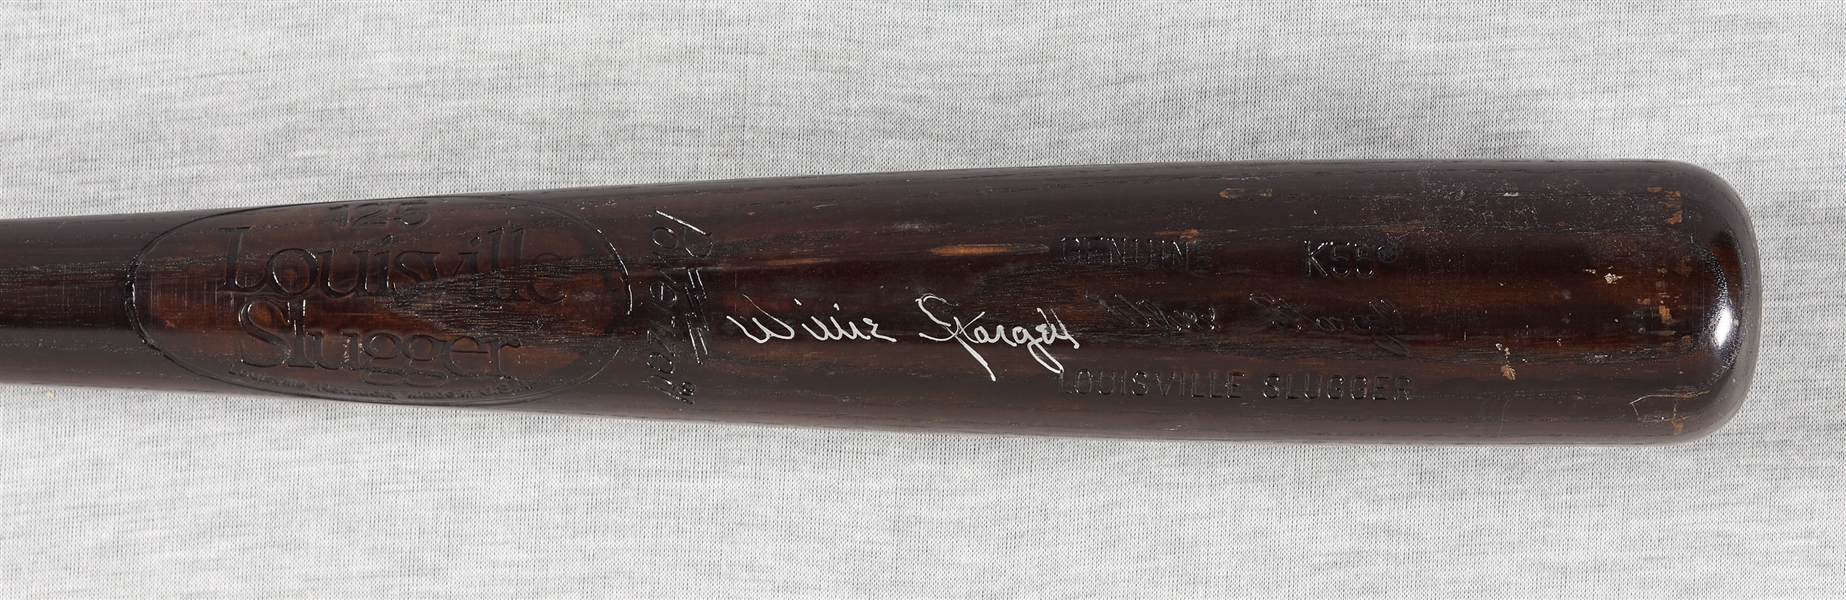 Willie Stargell Signed Louisville Slugger Bat (JSA)